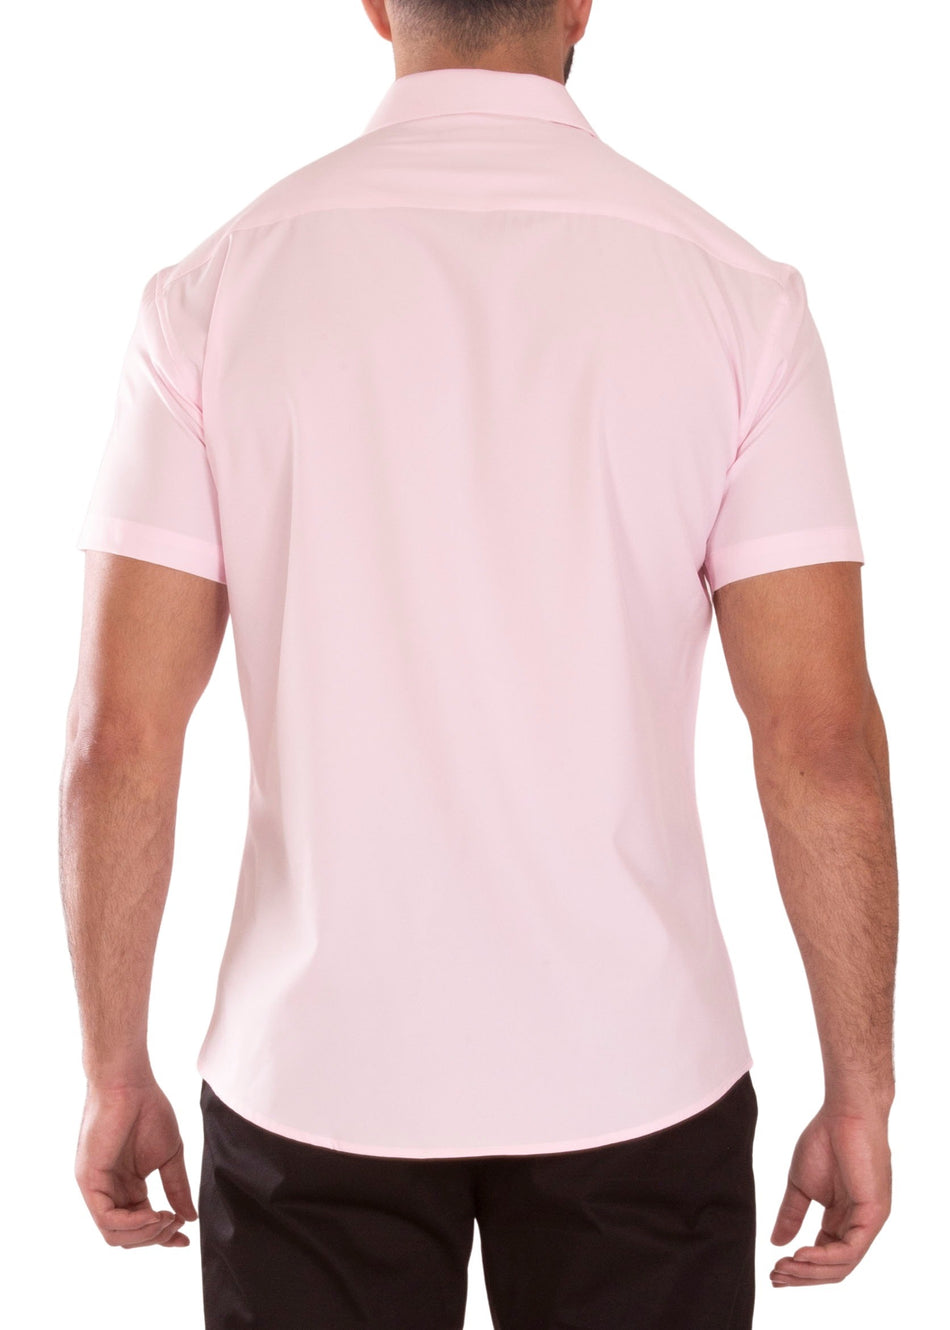 232101 - Pink Button Up Short Sleeve